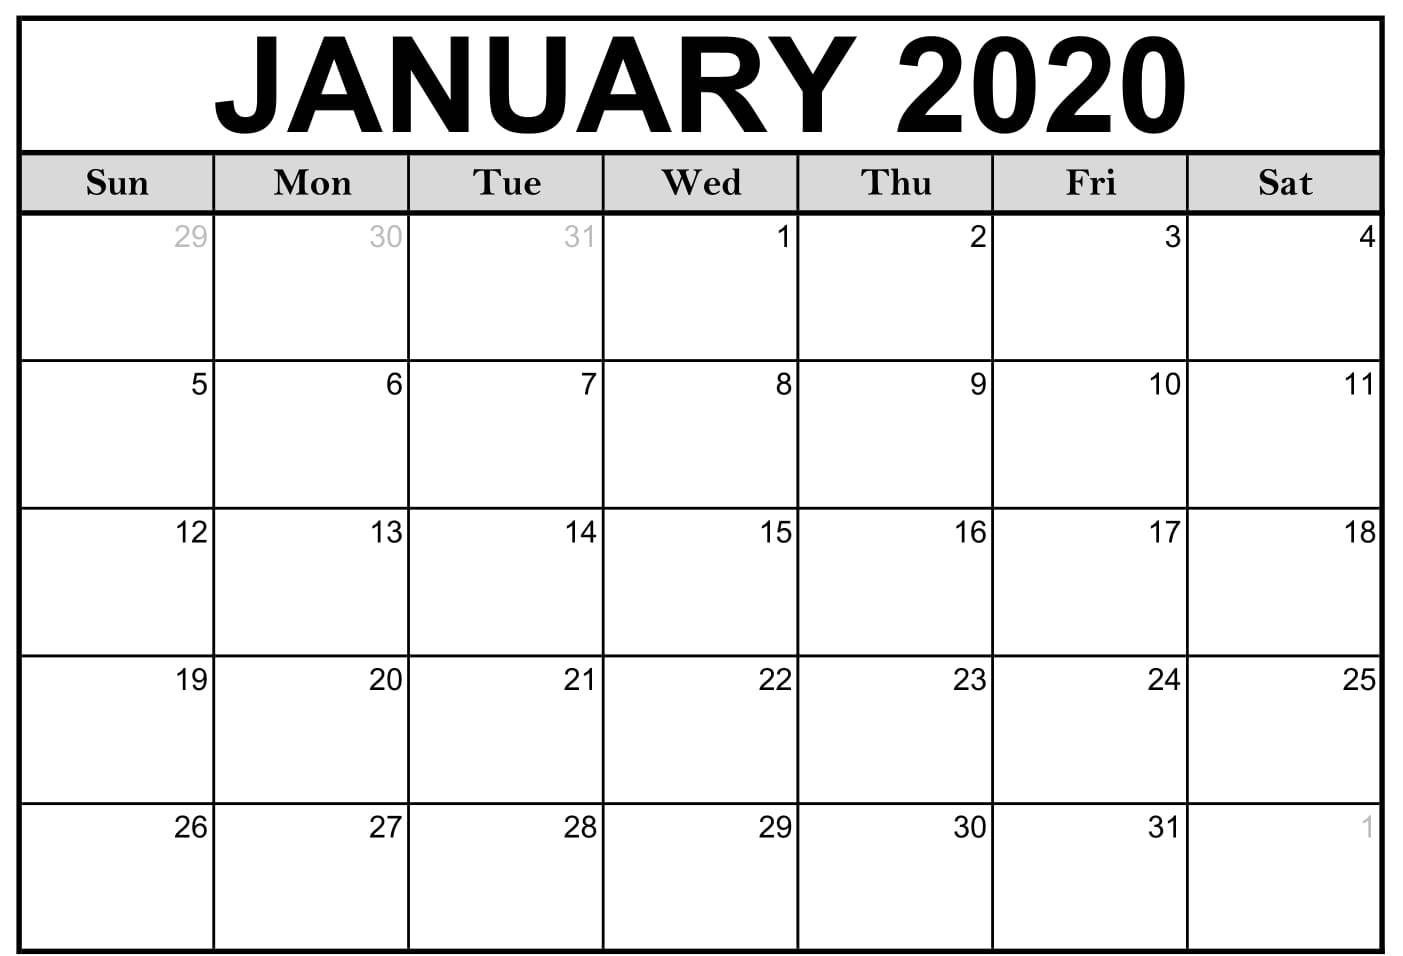 January 2020 Calendar Template | Free Printable Calendar January 2020 Calendar Nz